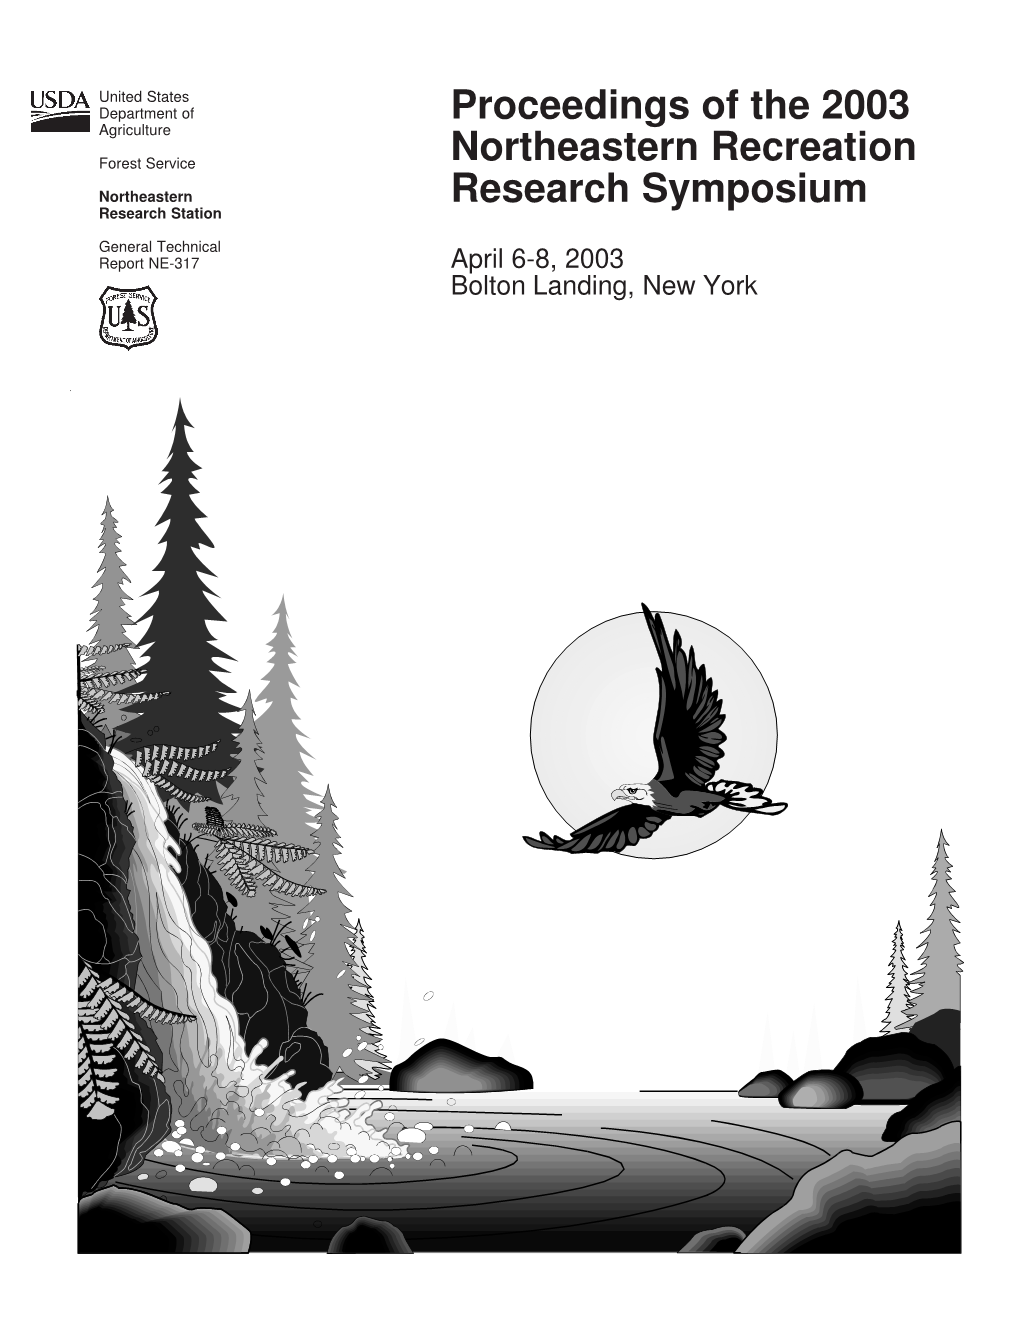 Proceedings, 2003 Northeastern Recreation Research Symposium